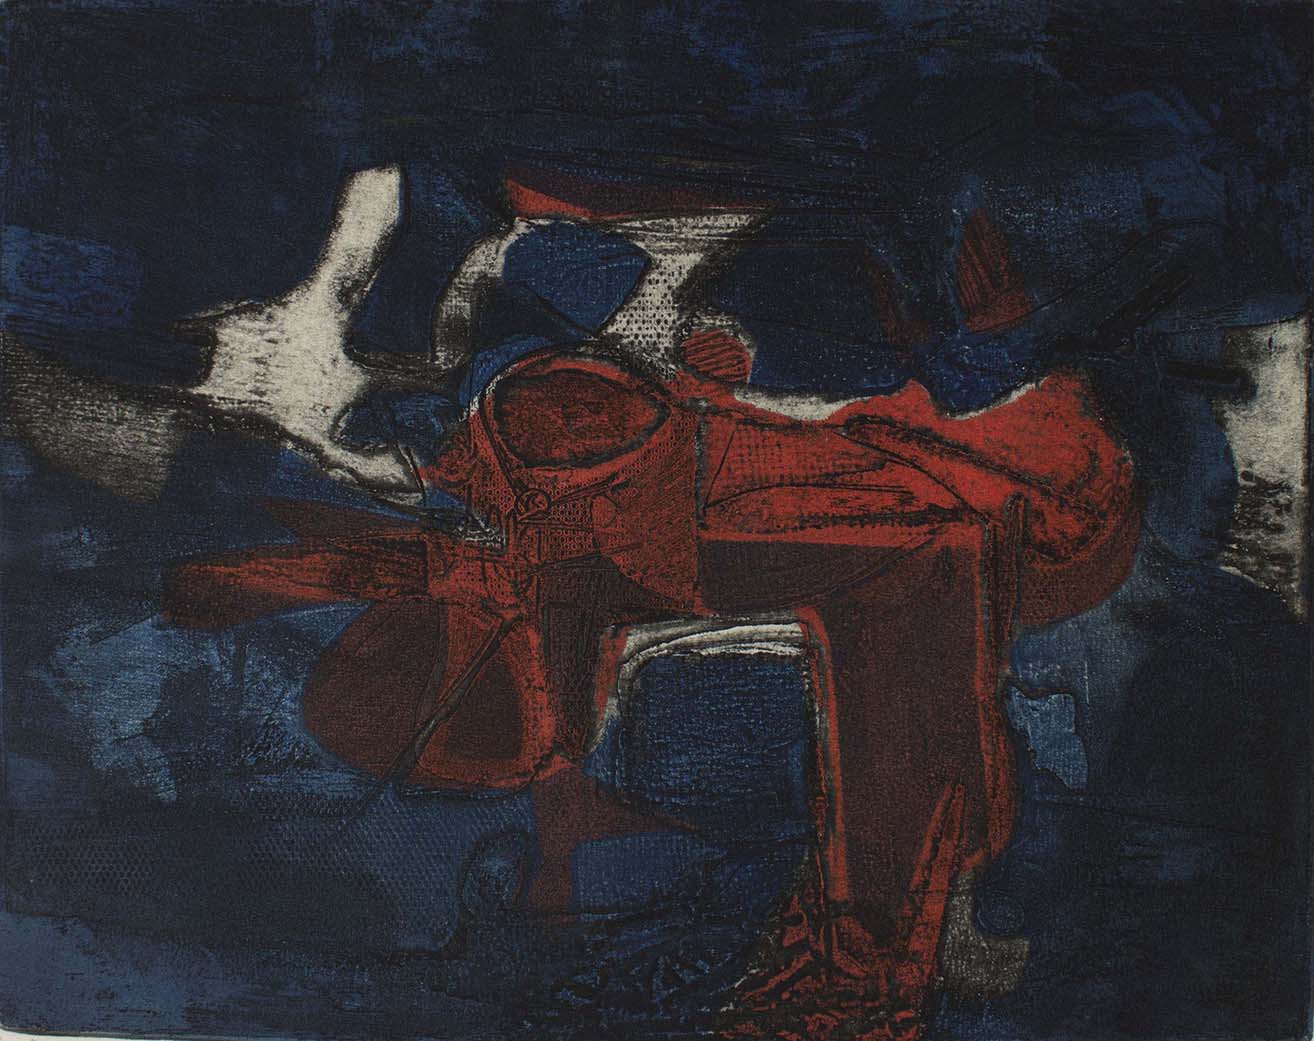 Karl Kasten, "La Mer," color etching